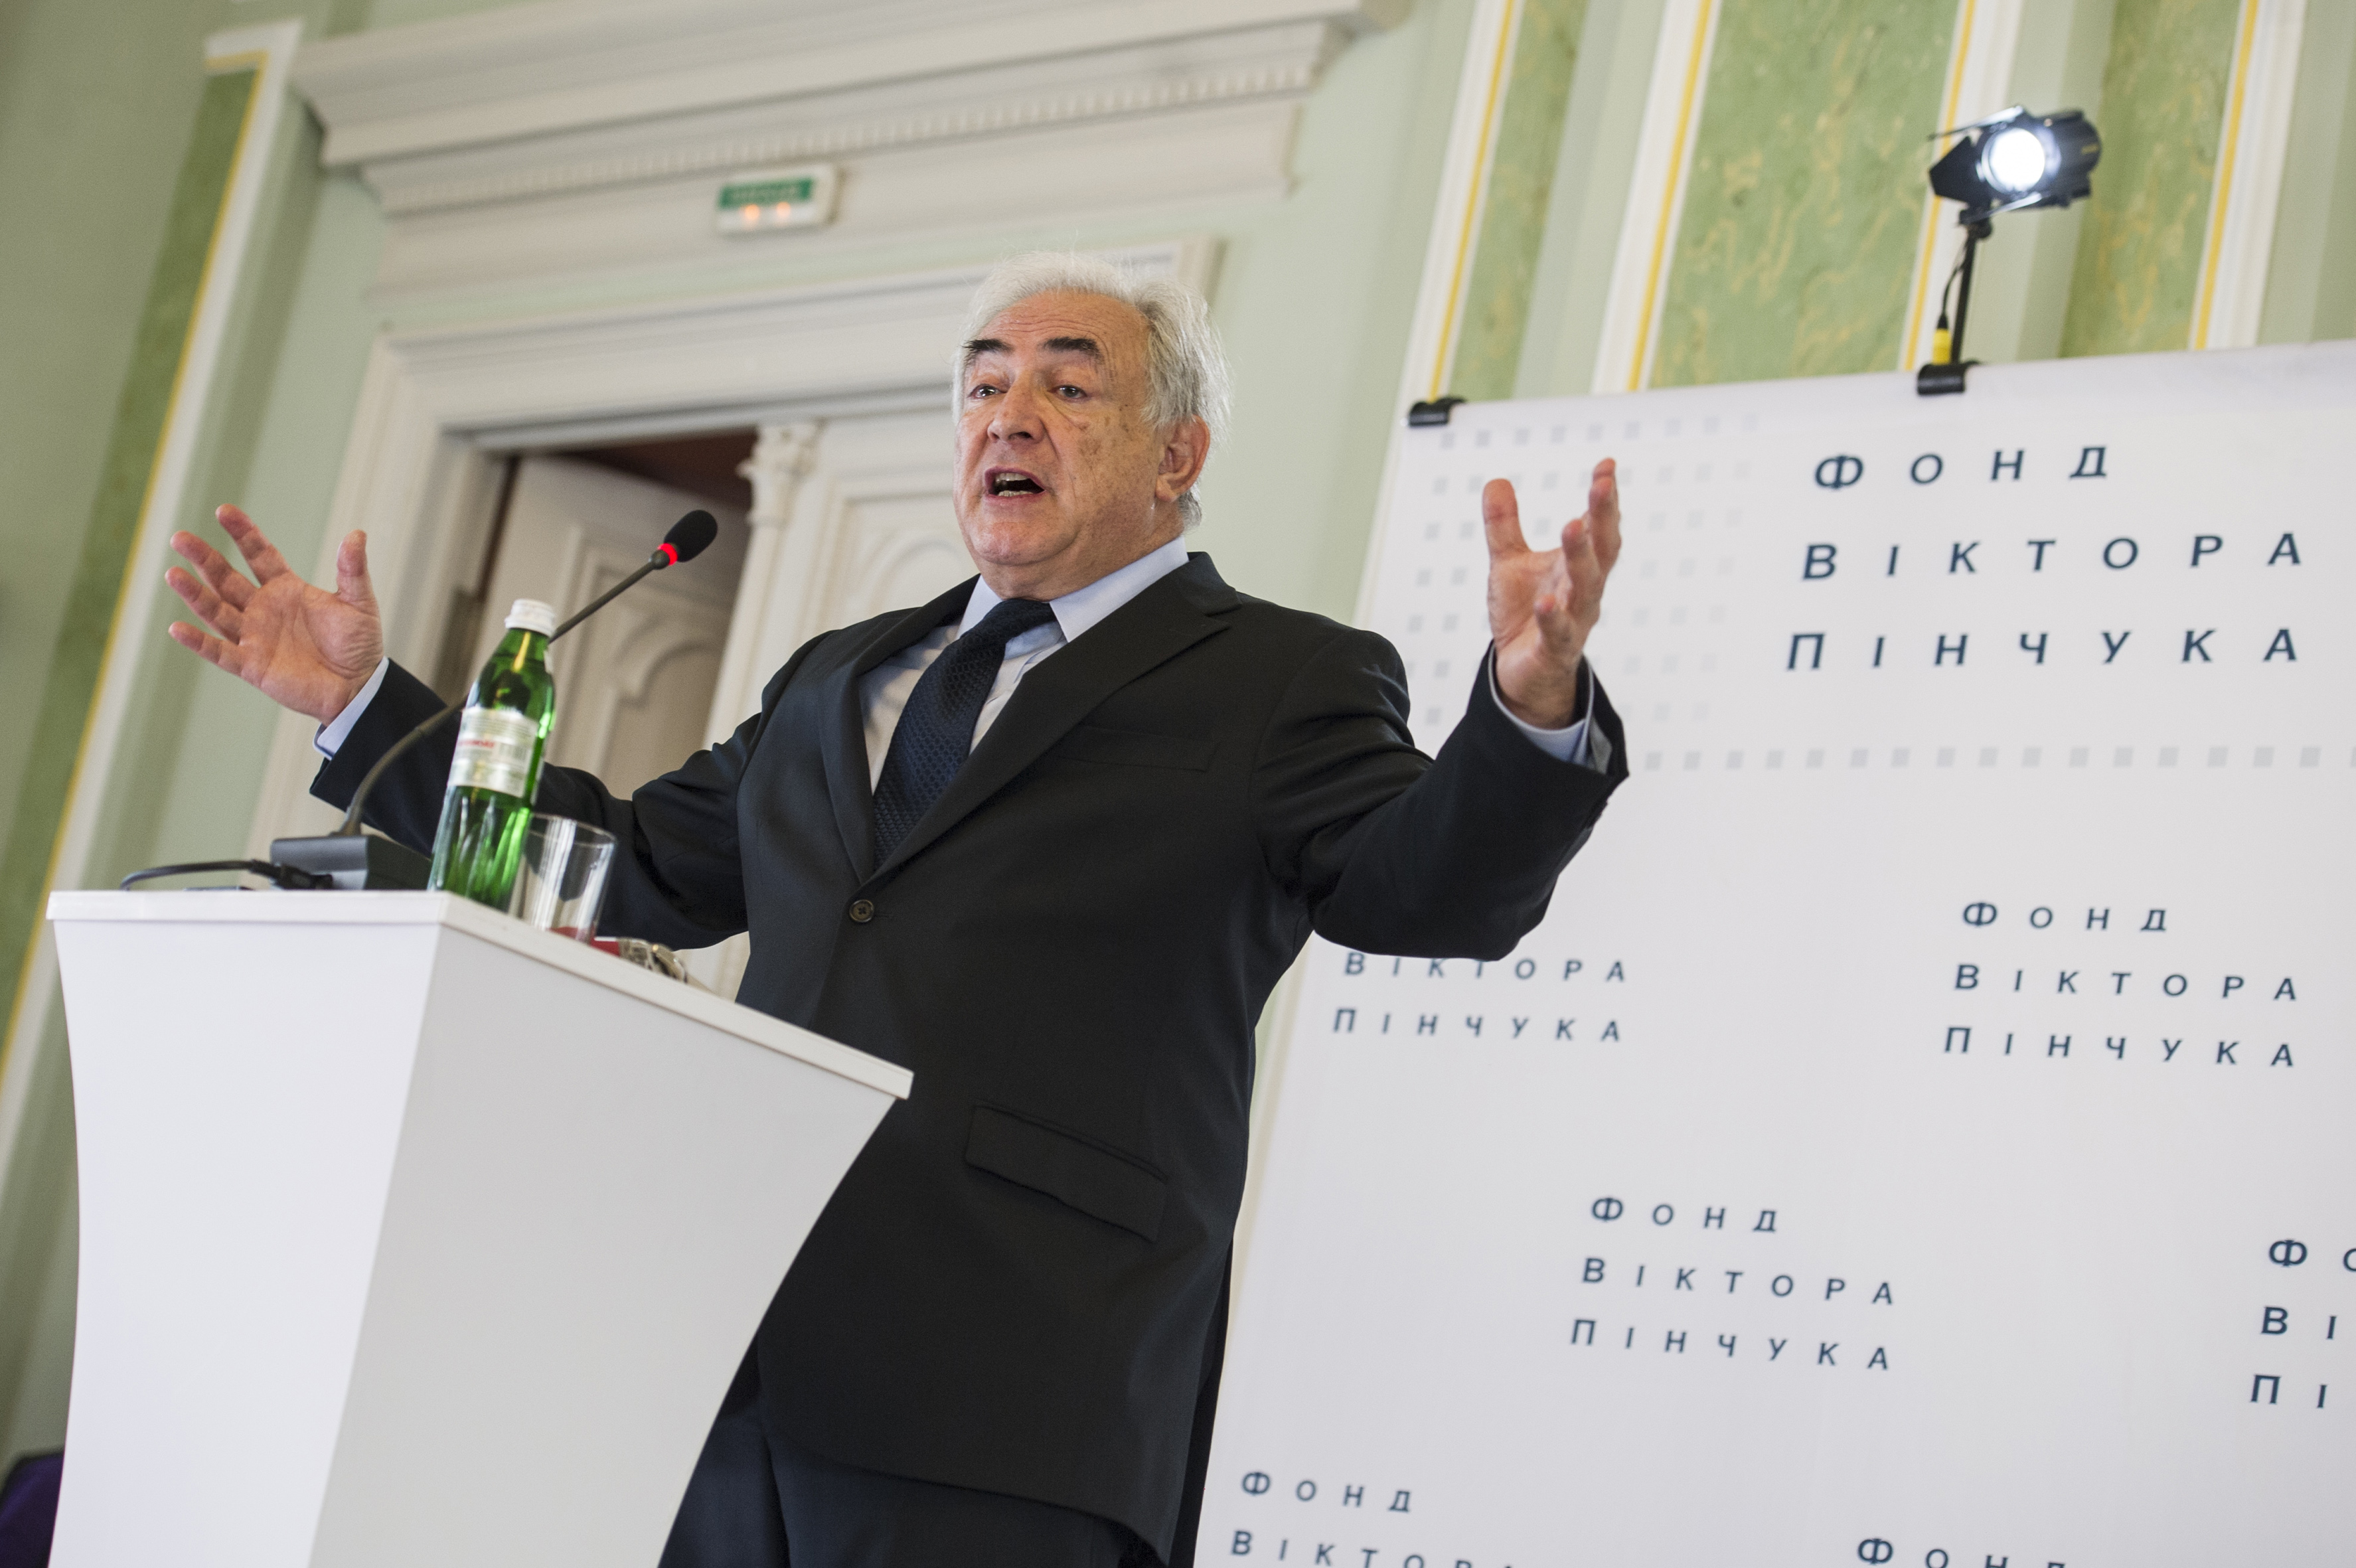 Public Lecture featuring Dominique Strauss-Kahn